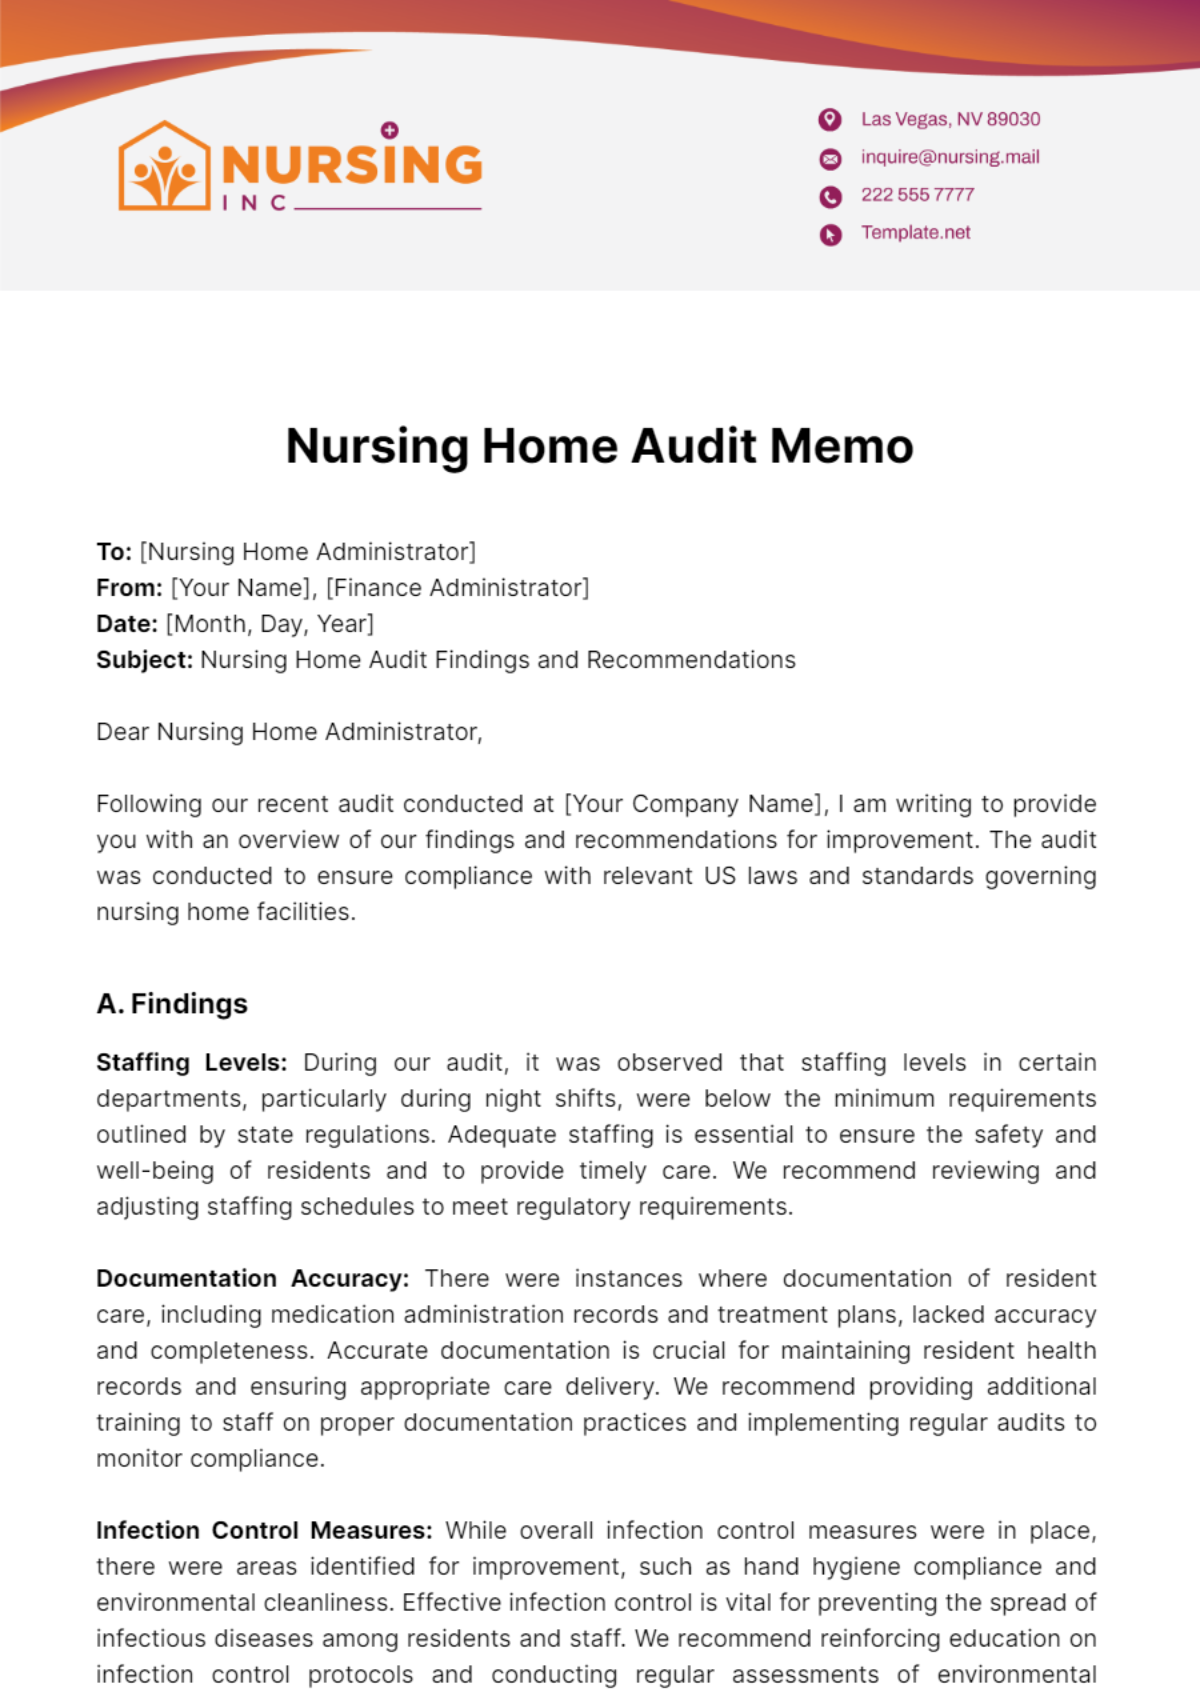 Nursing Home Audit Memo Template